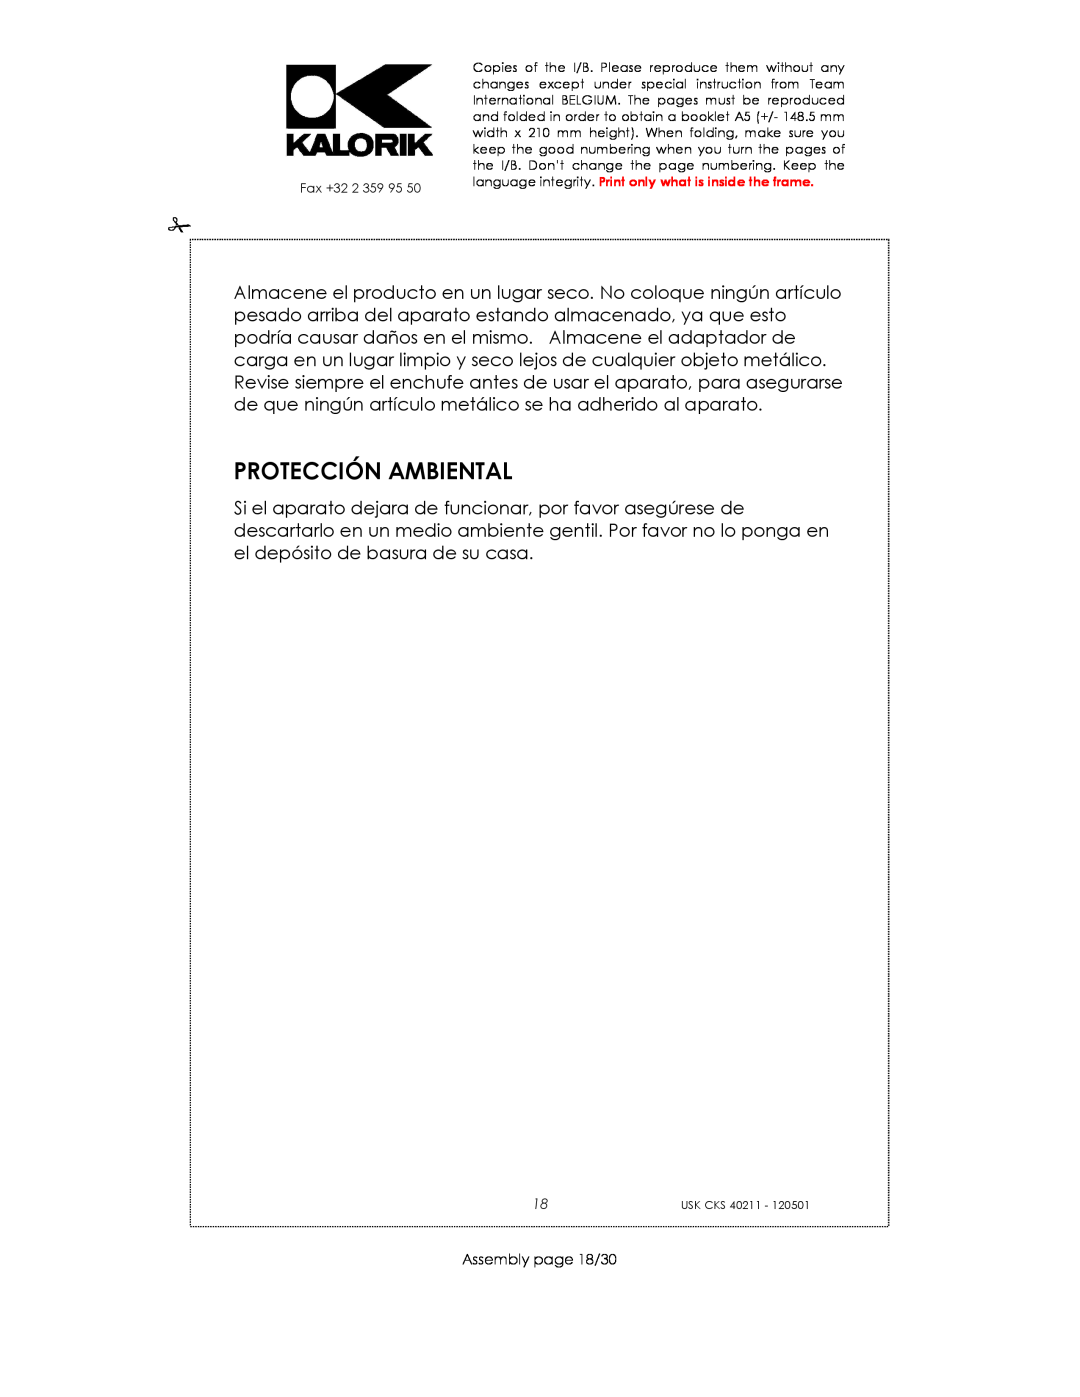 Kalorik CKS 40211 manual Protección Ambiental, Assembly page 18/30 